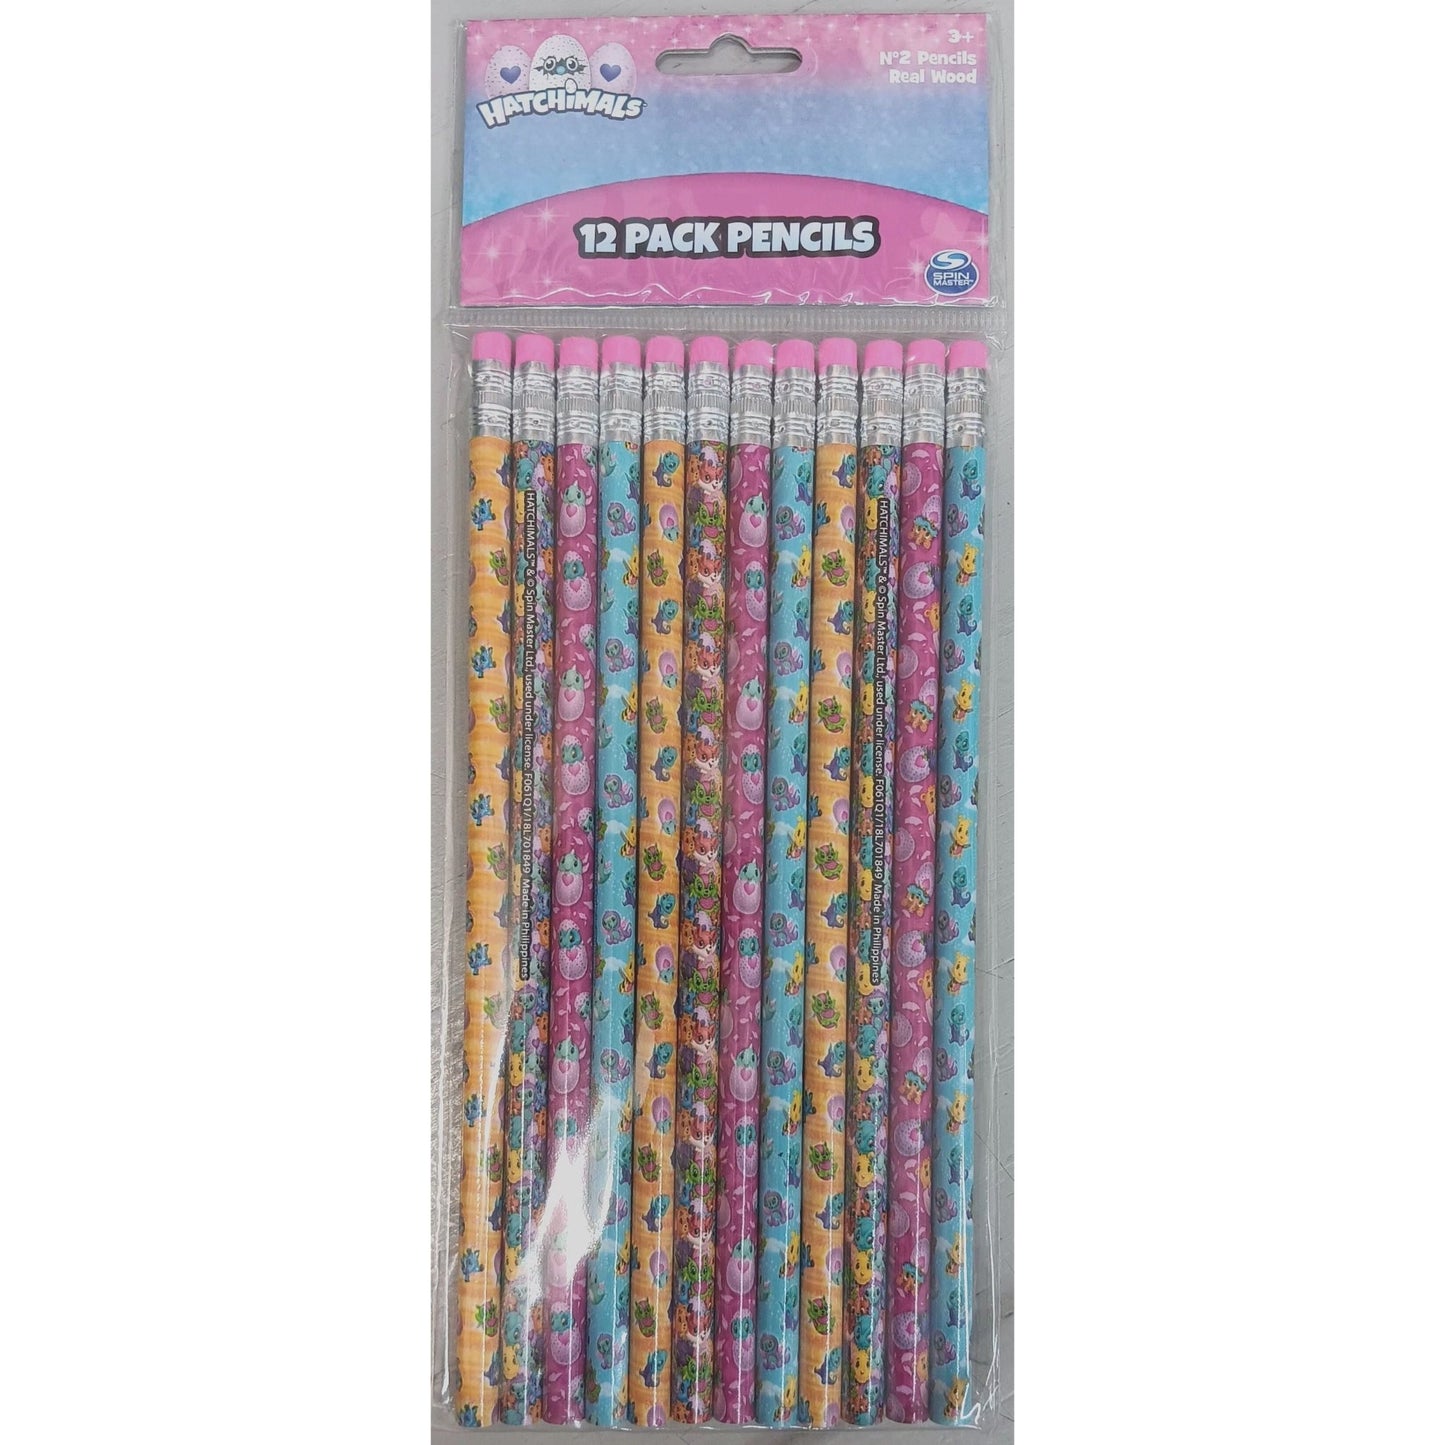 Hatchimals Wooden Pencils Pink/Green/Purple Pack of 12 - Partytoyz Inc